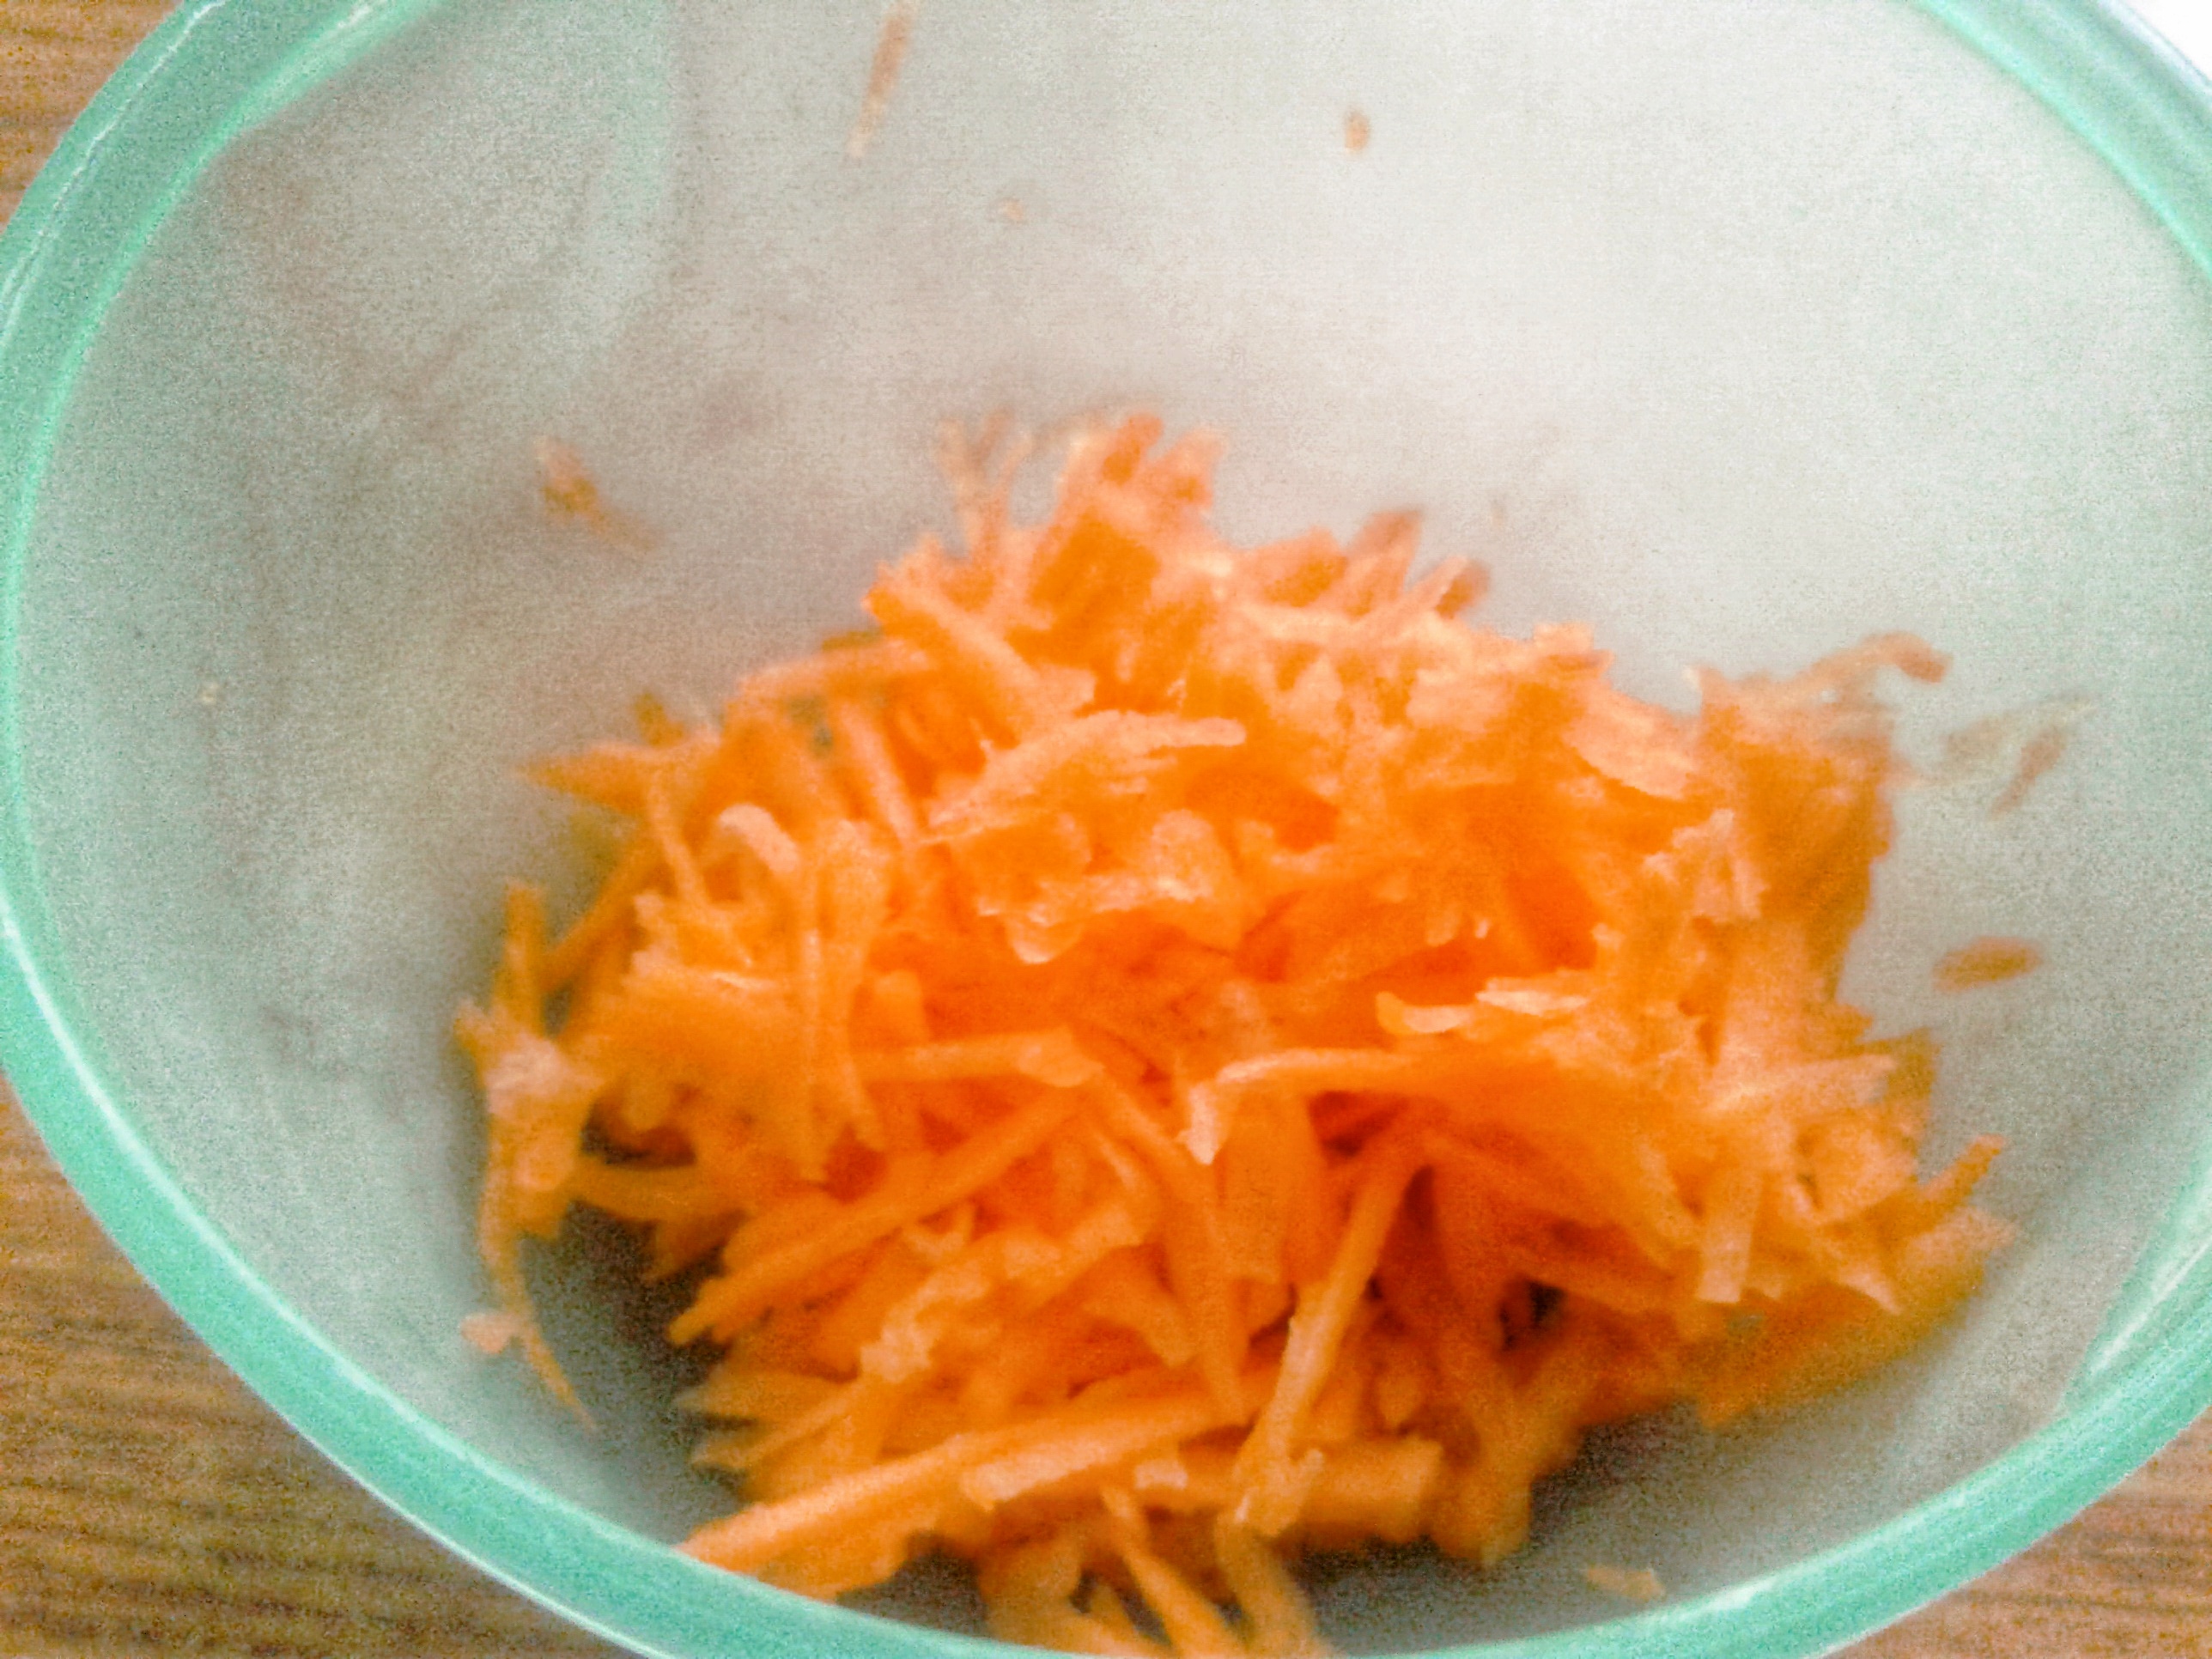 Chopped Carrot.jpeg